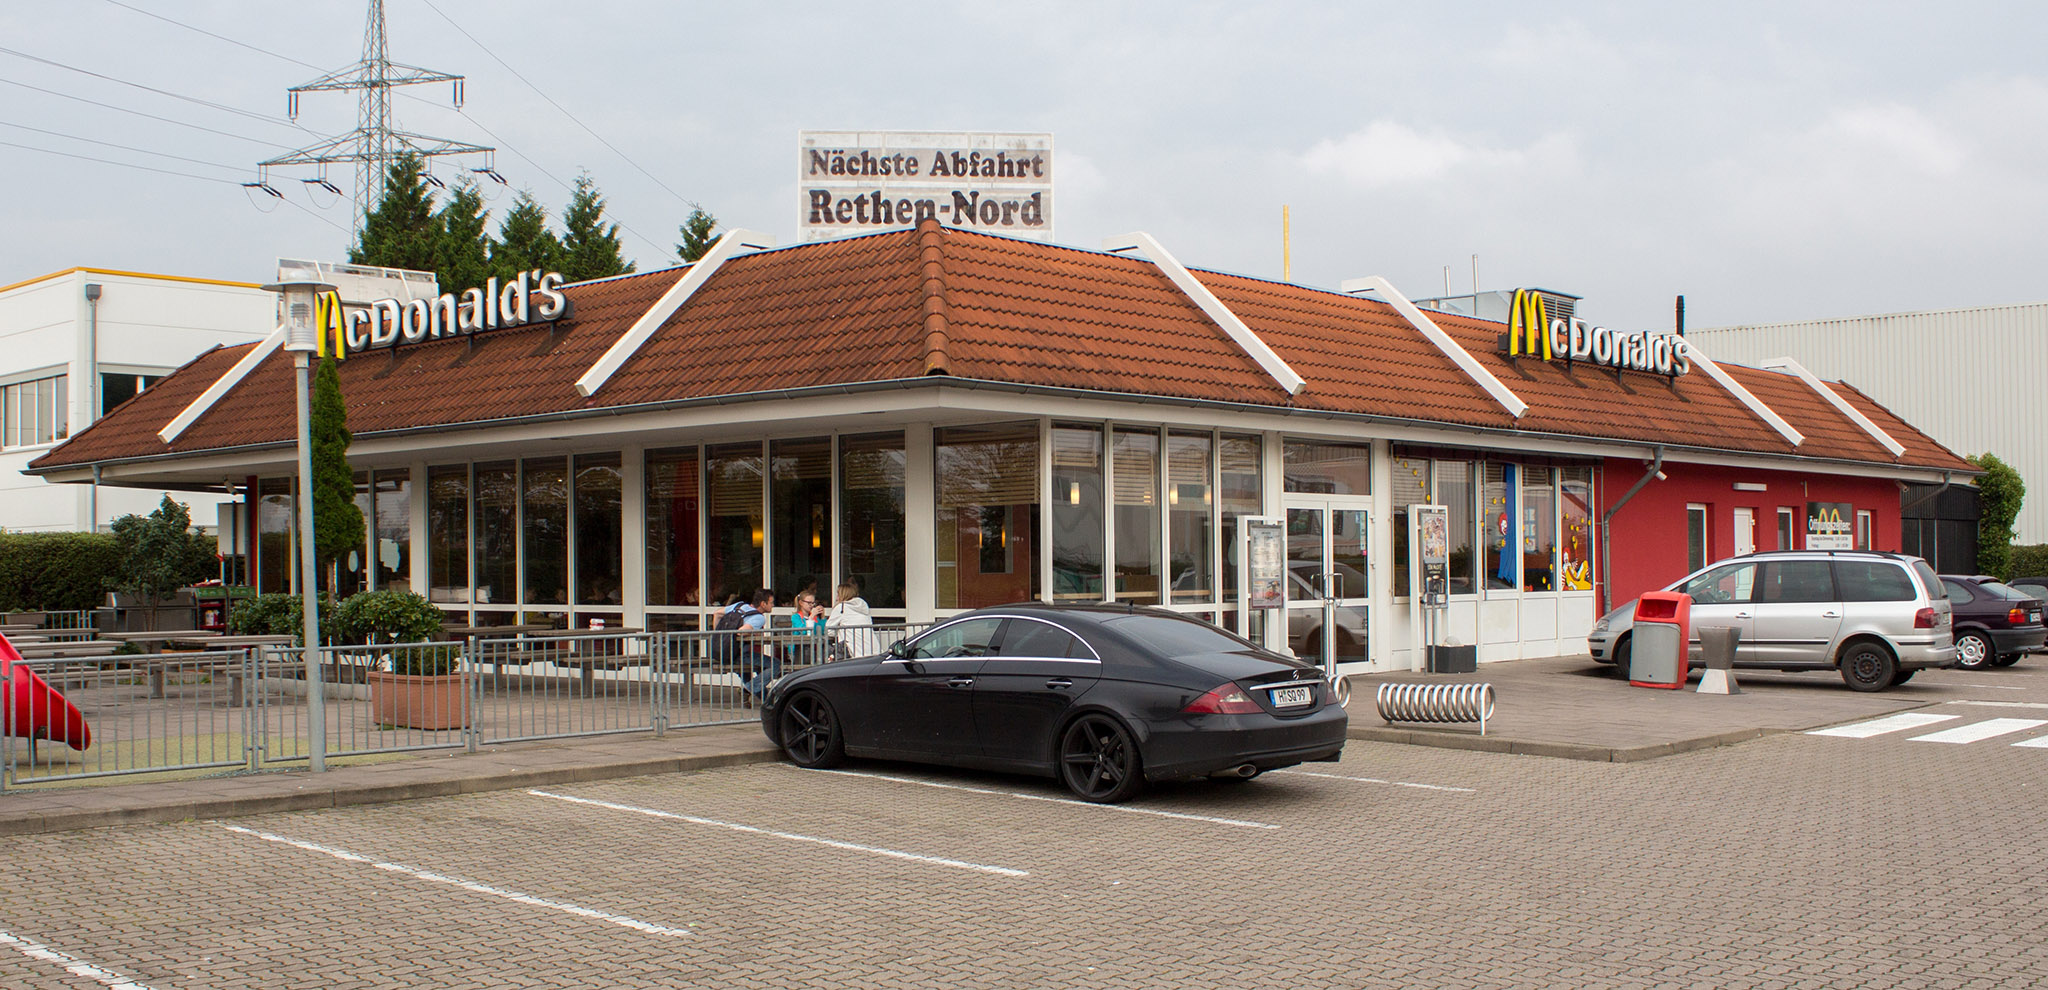 Das McDonald’s-Restaurant in Laatzen (Kieler Straße)